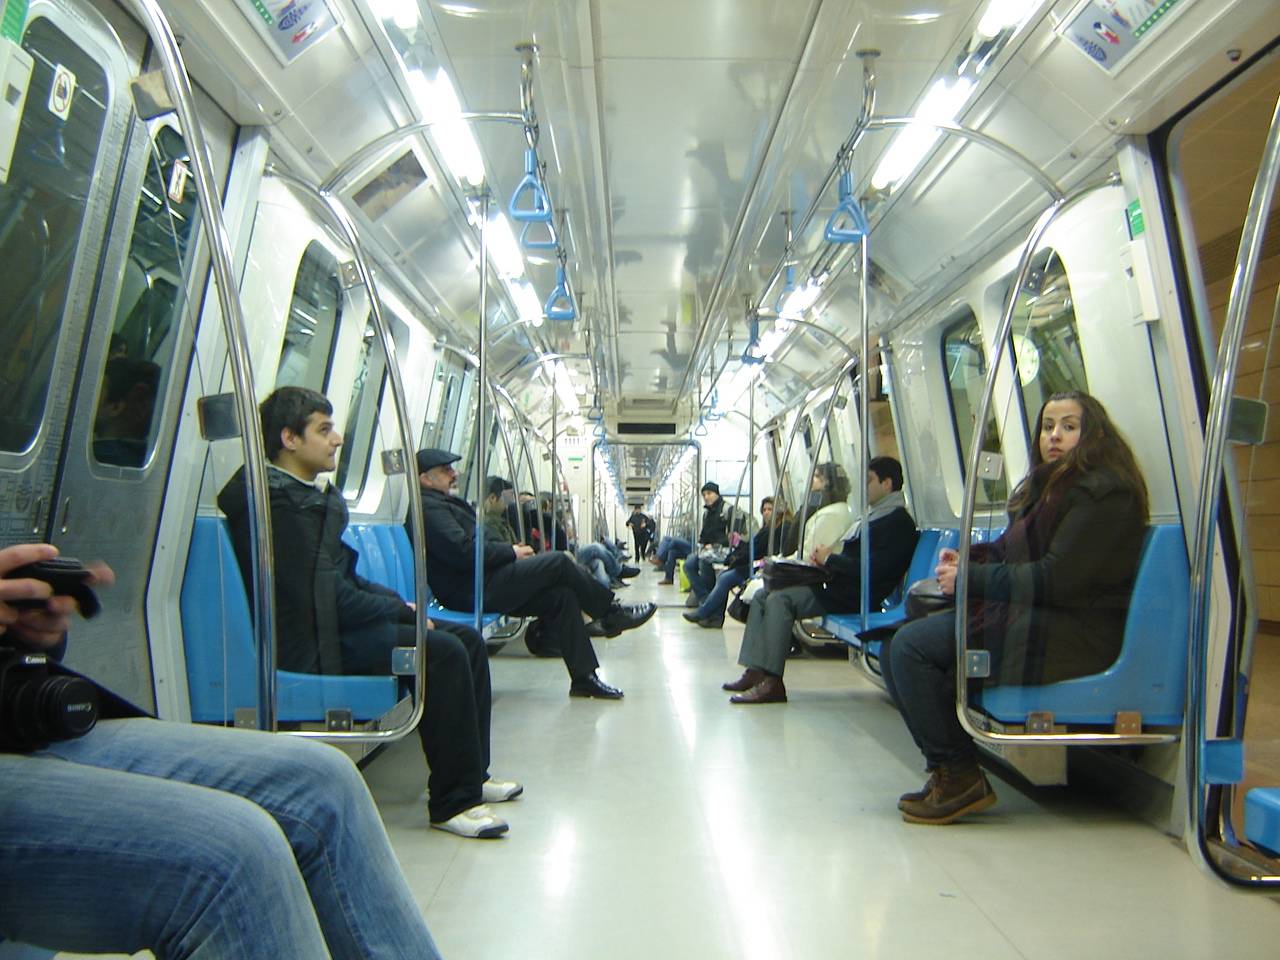 вагон метро в Стамбуле